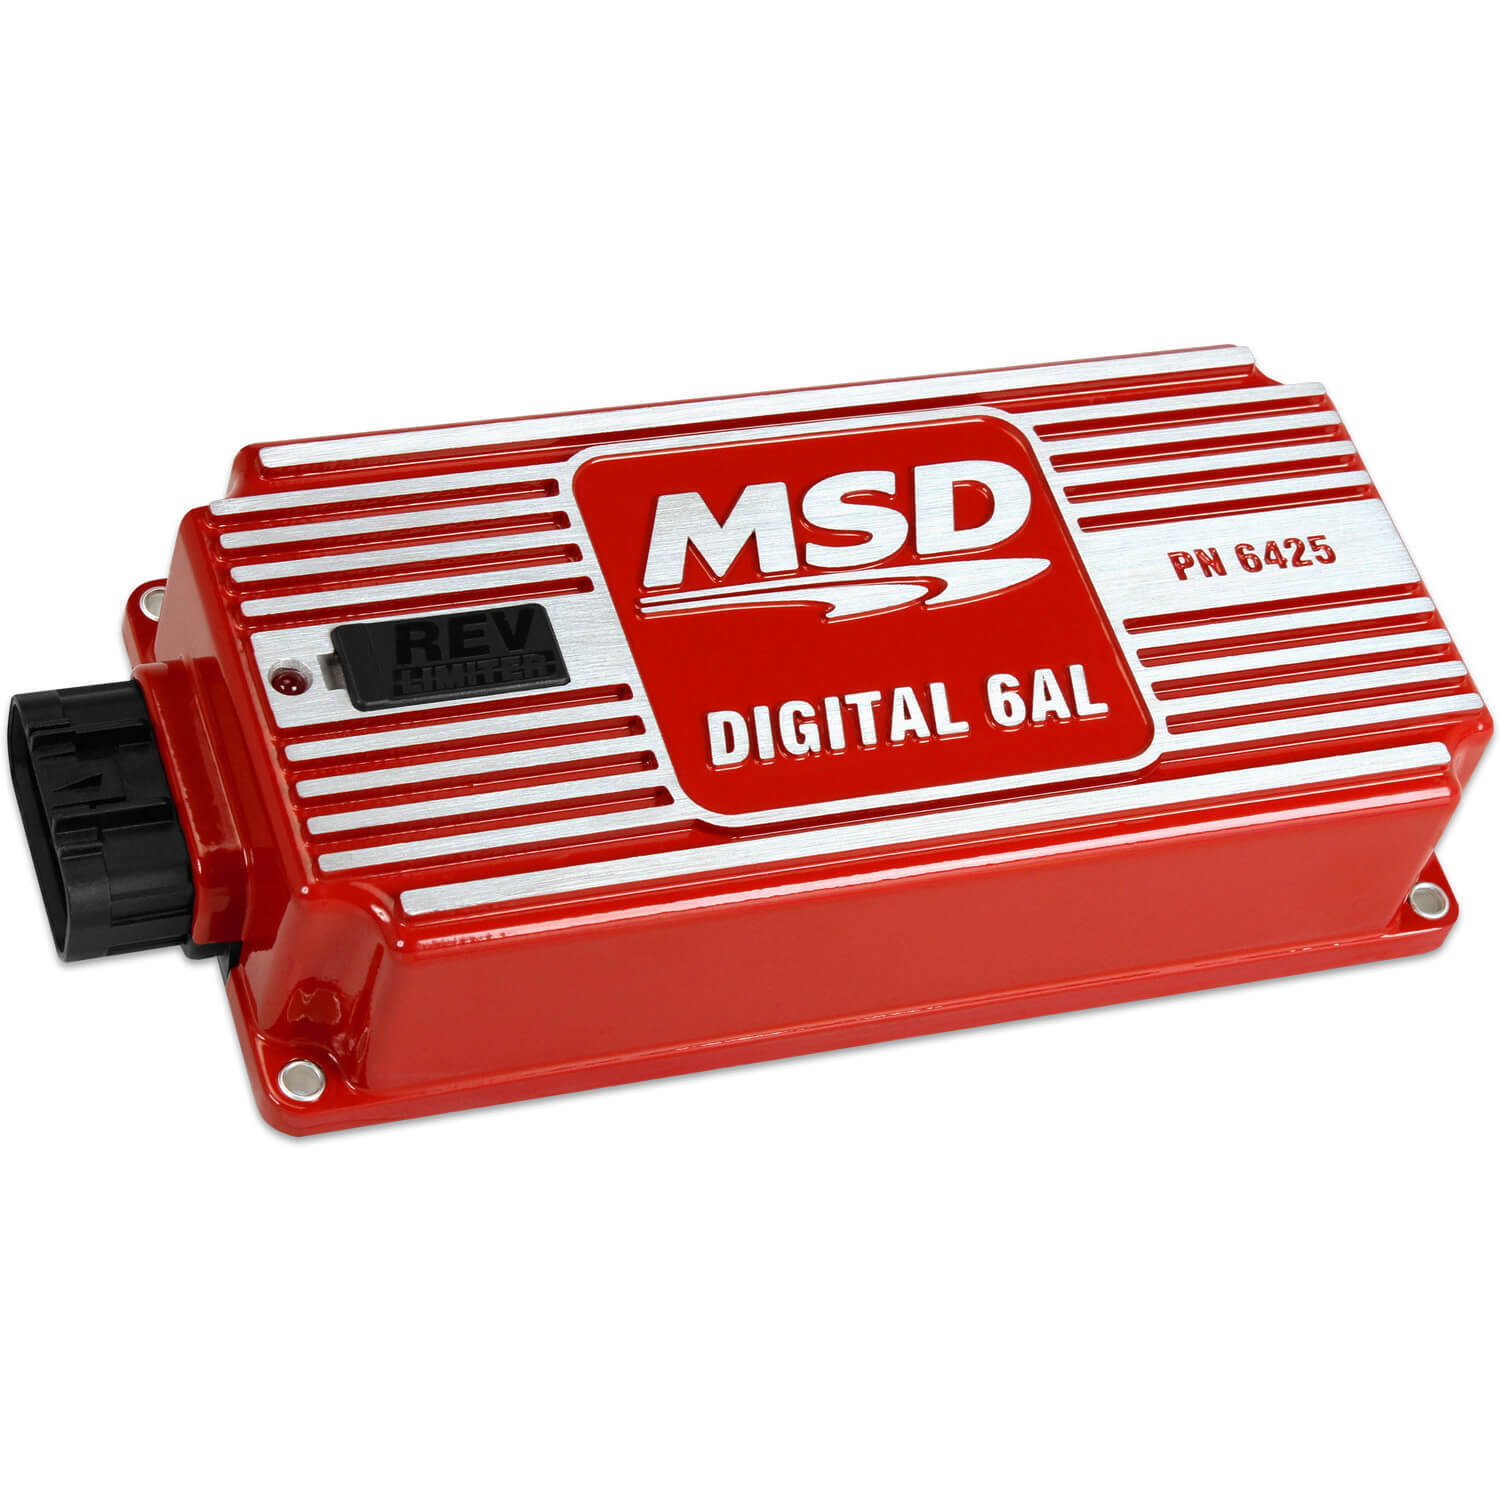 6425CR Factory Refurbished MSD Digital 6AL Ignition Control - Red